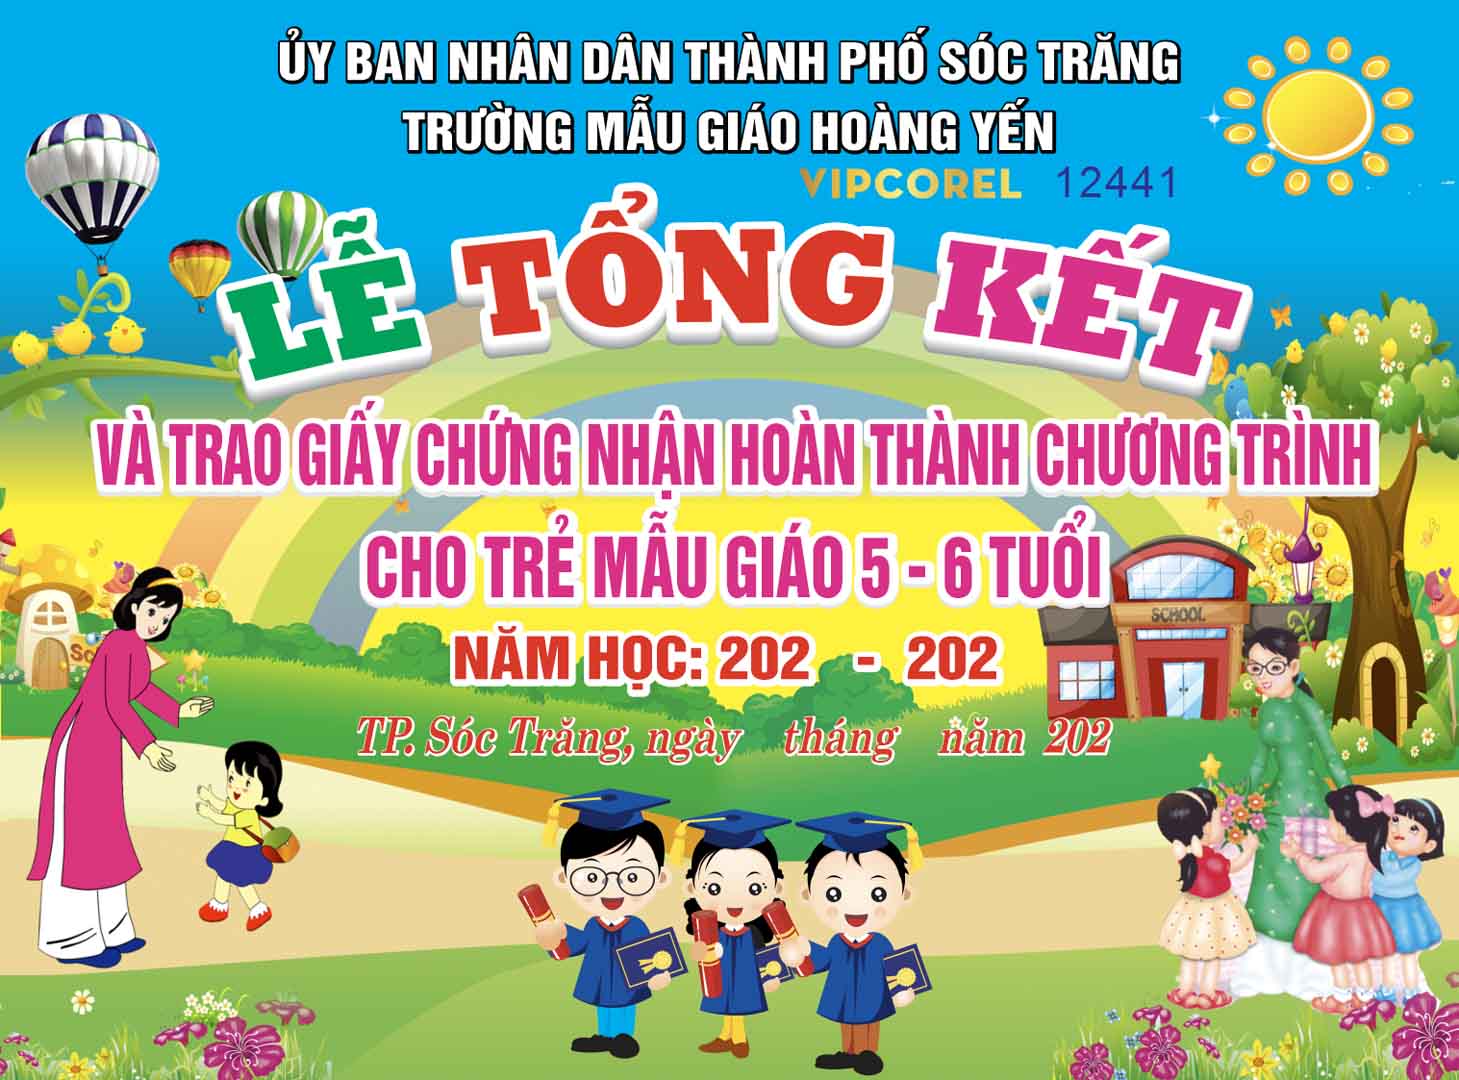 market le tong ket chuong trinh cho tre mau giao.jpg